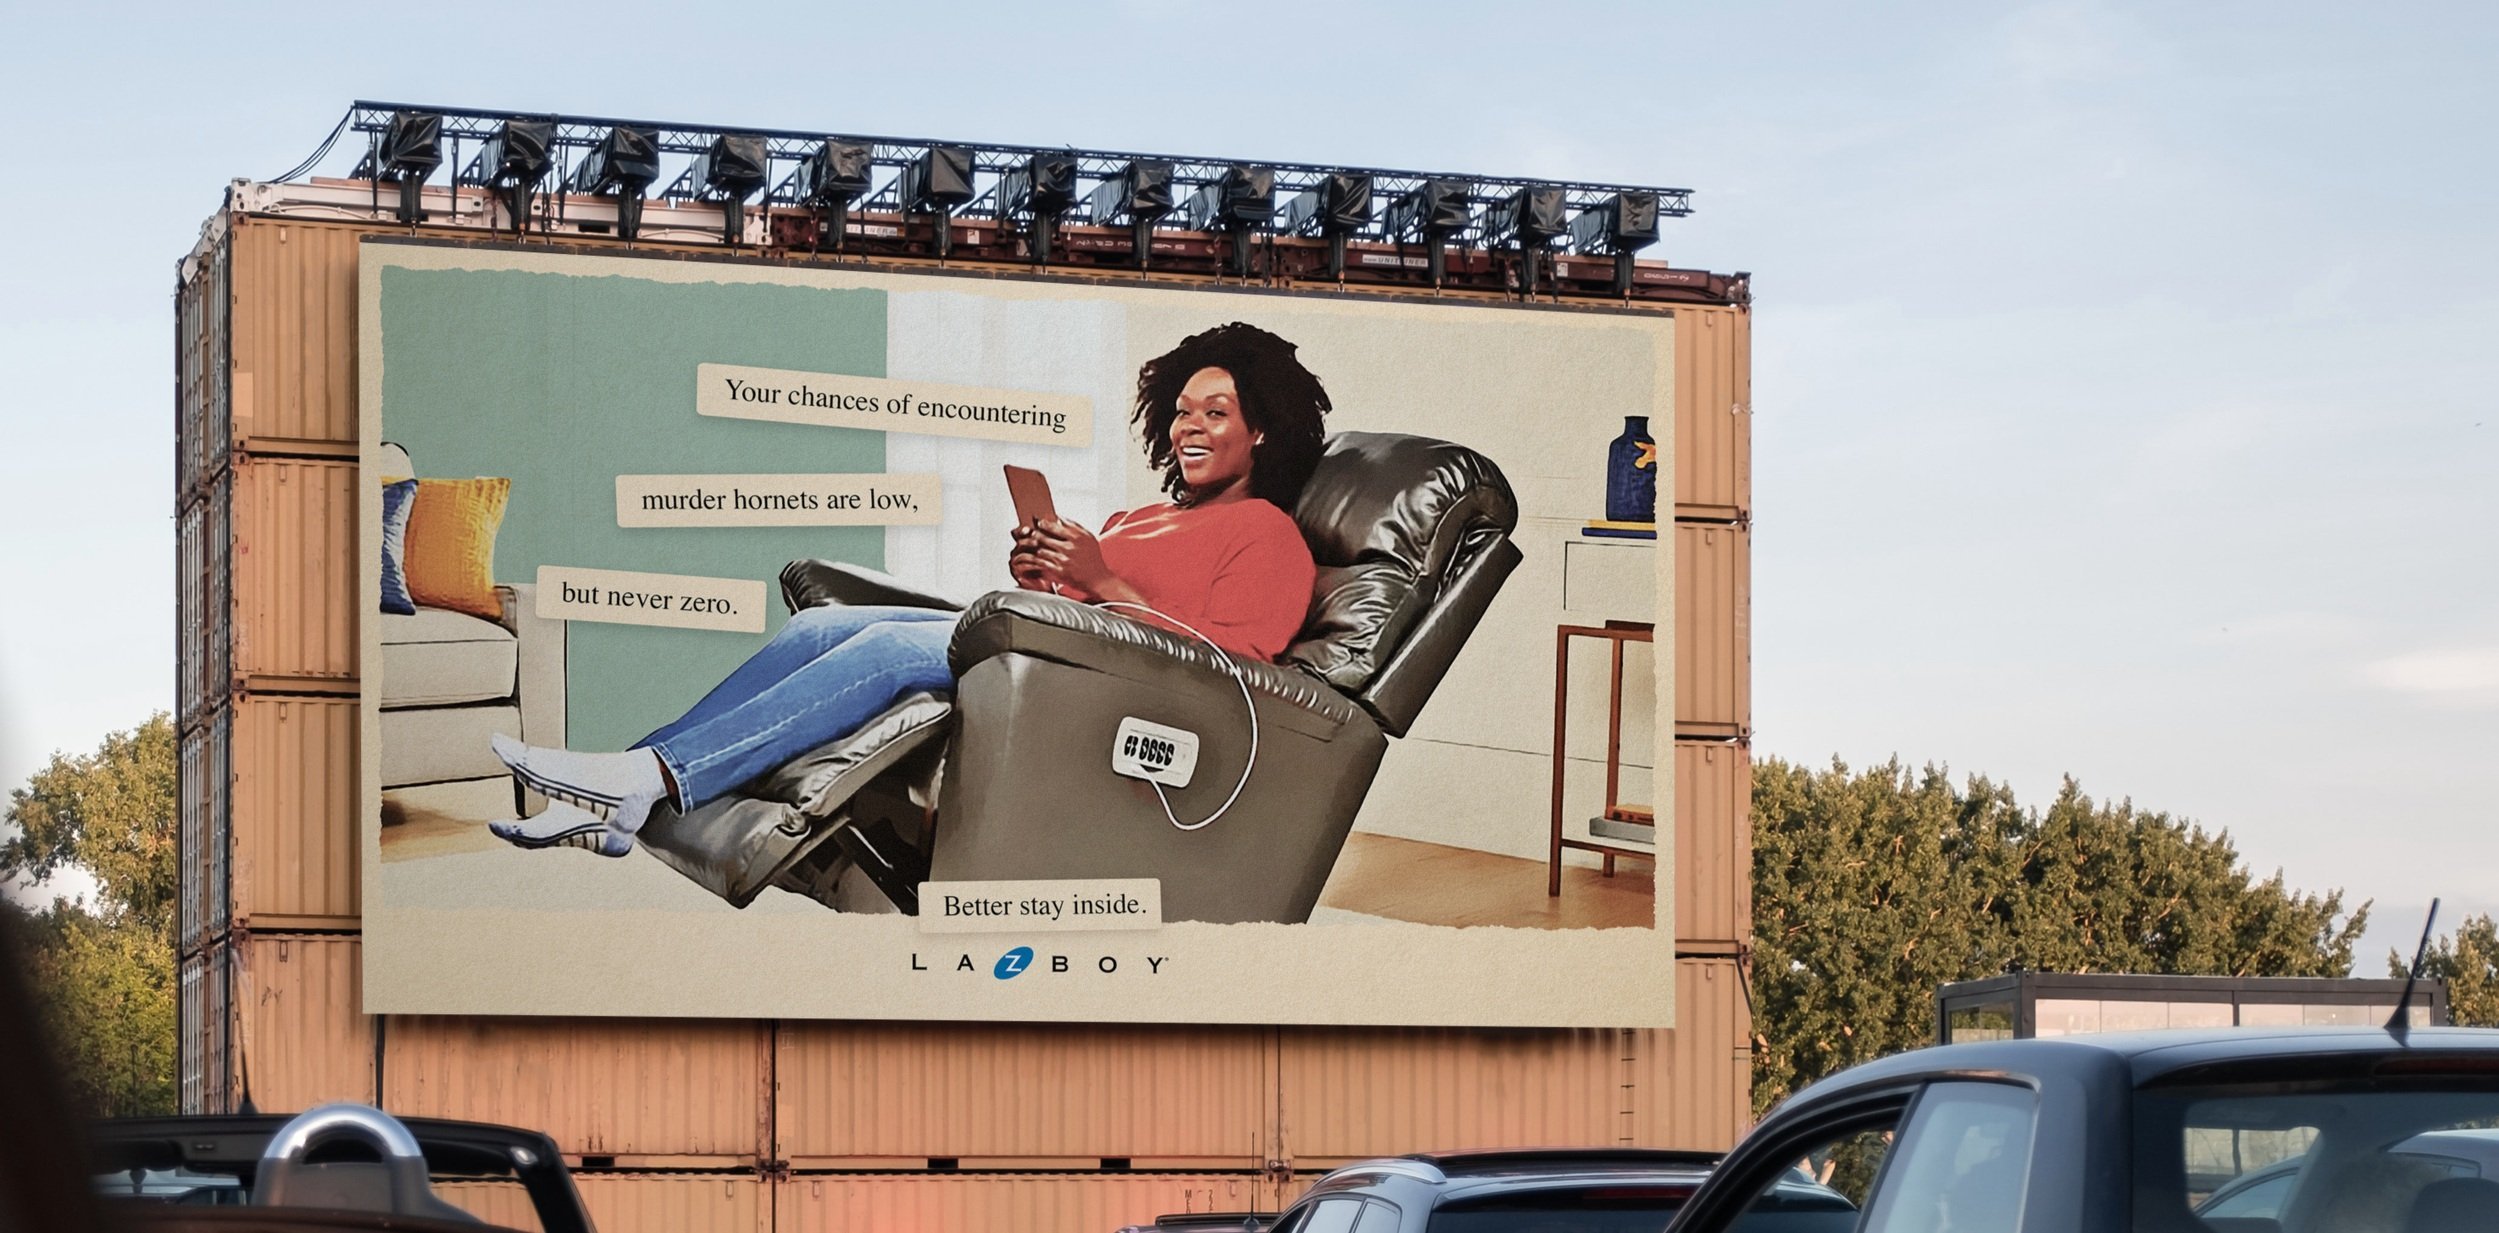 Billboard+Cars+Park+Mockup.jpeg